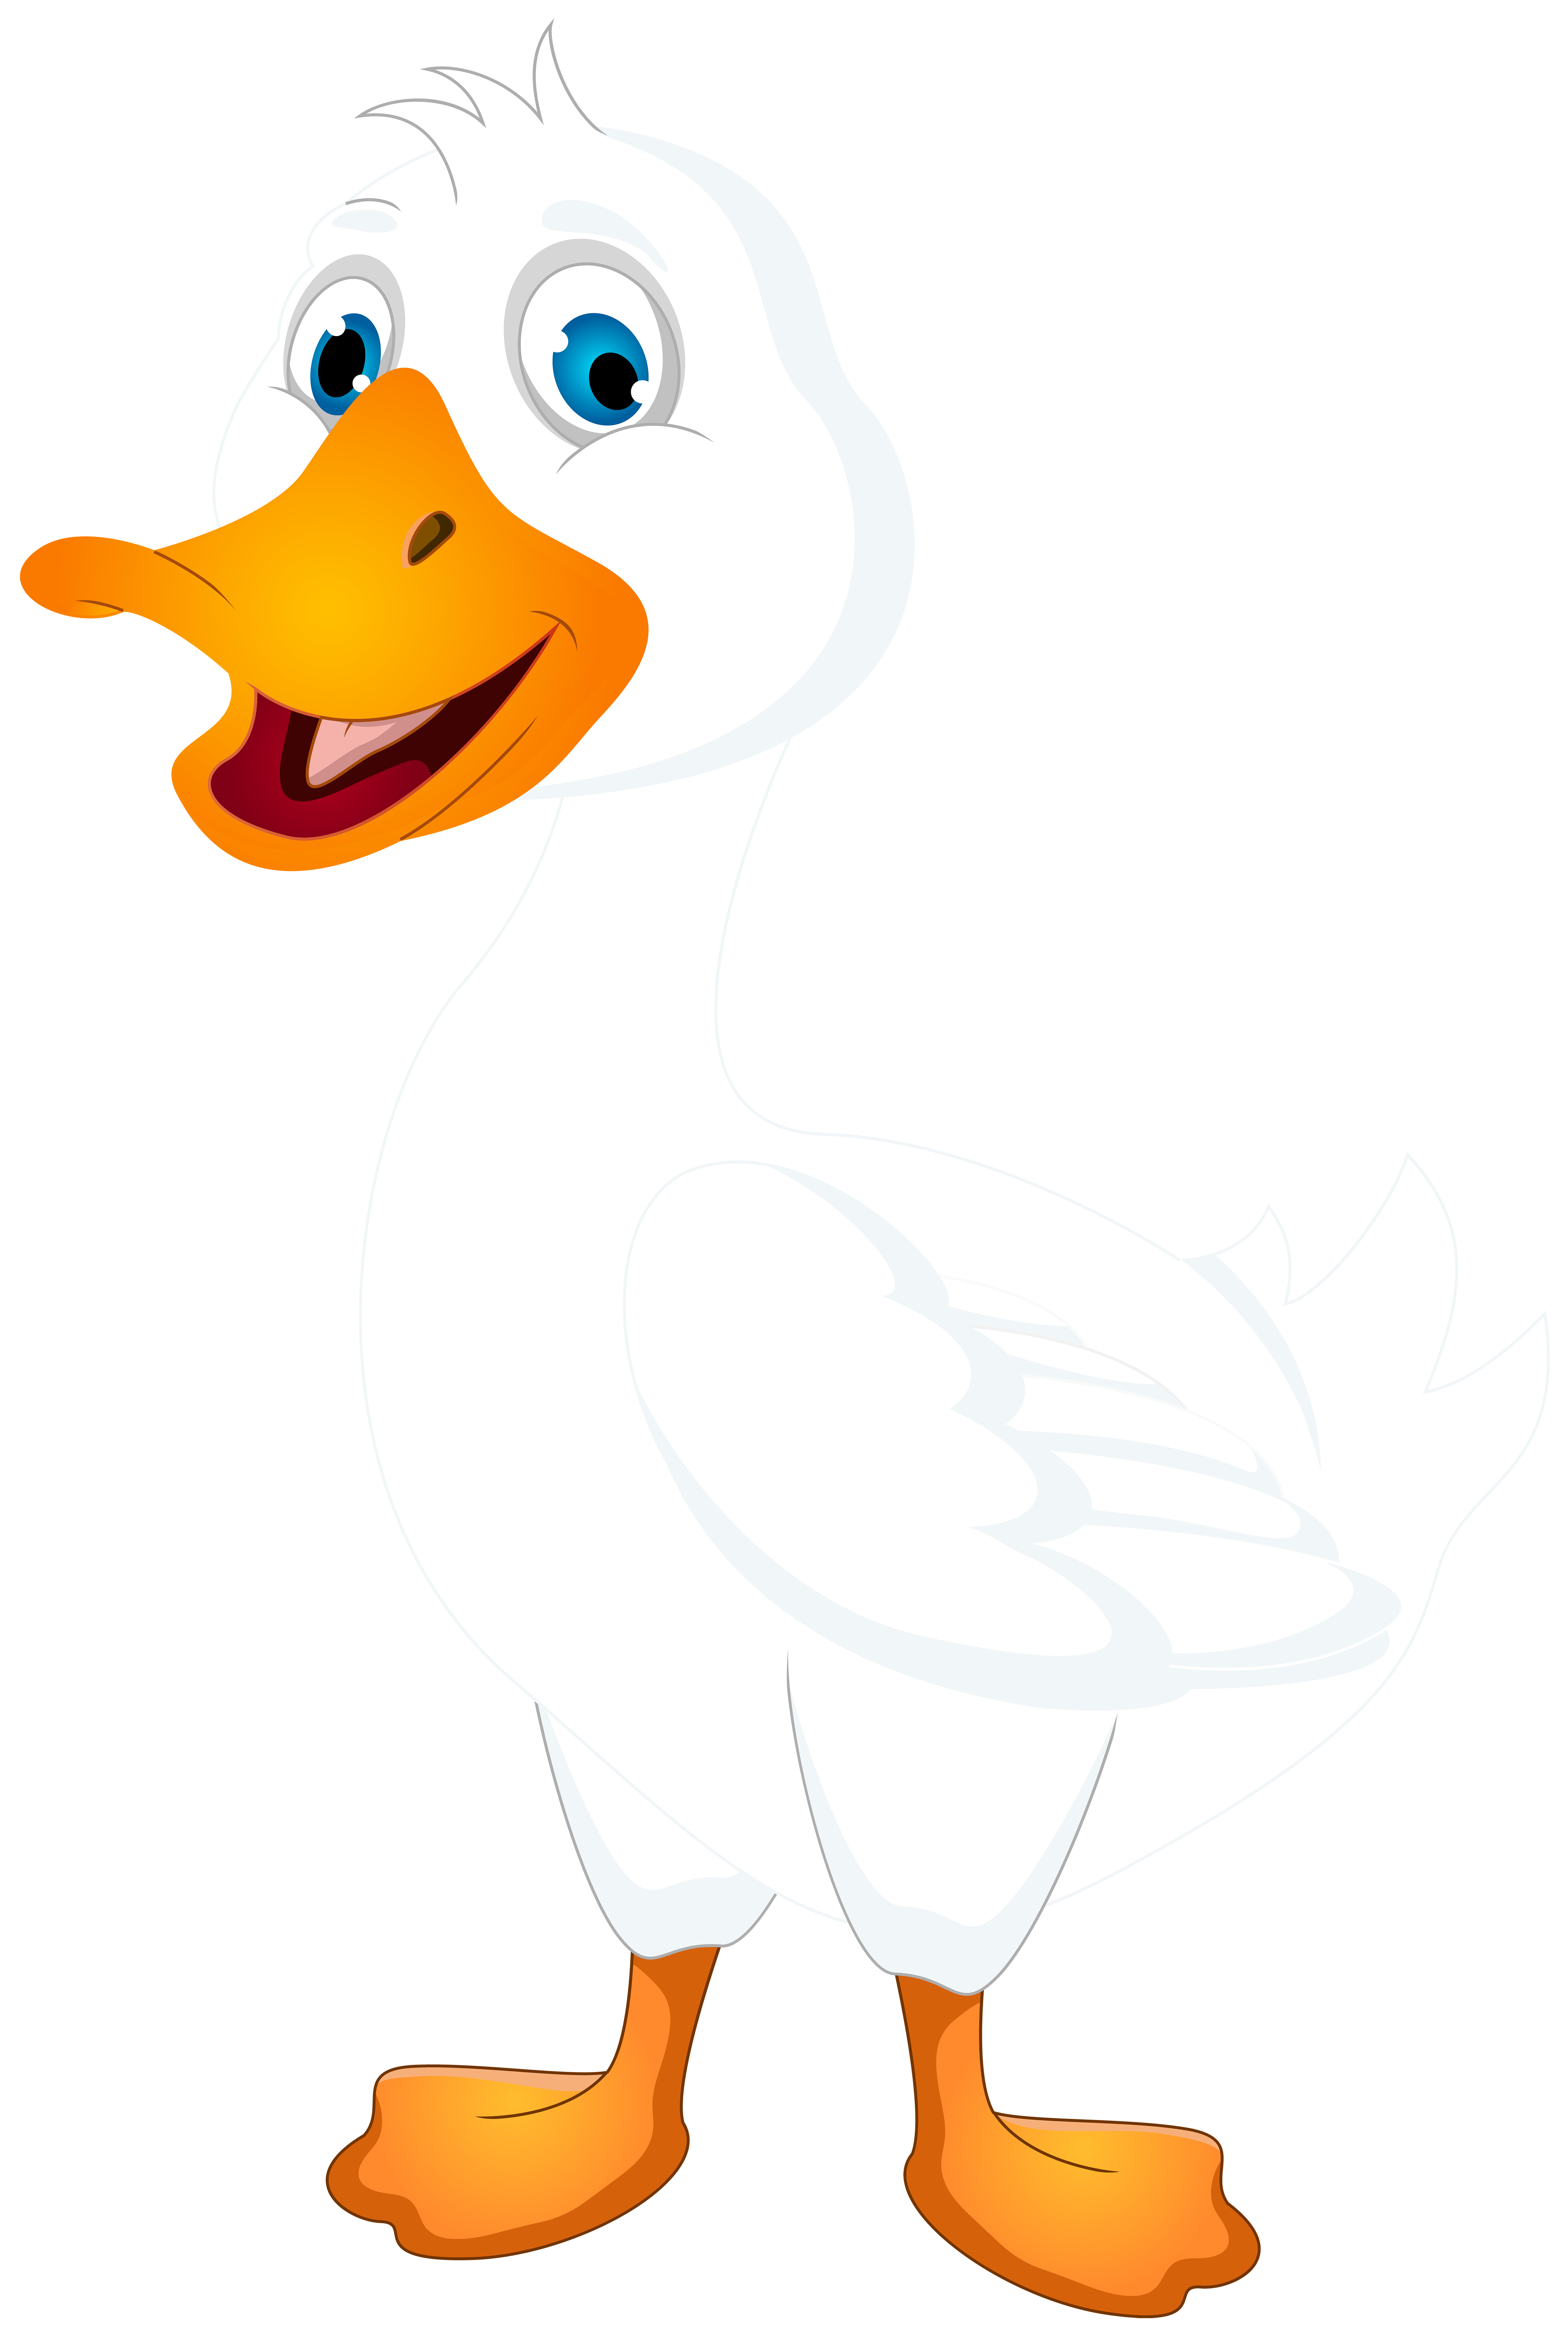 White Duck Cartoon PNG Clip Art Image